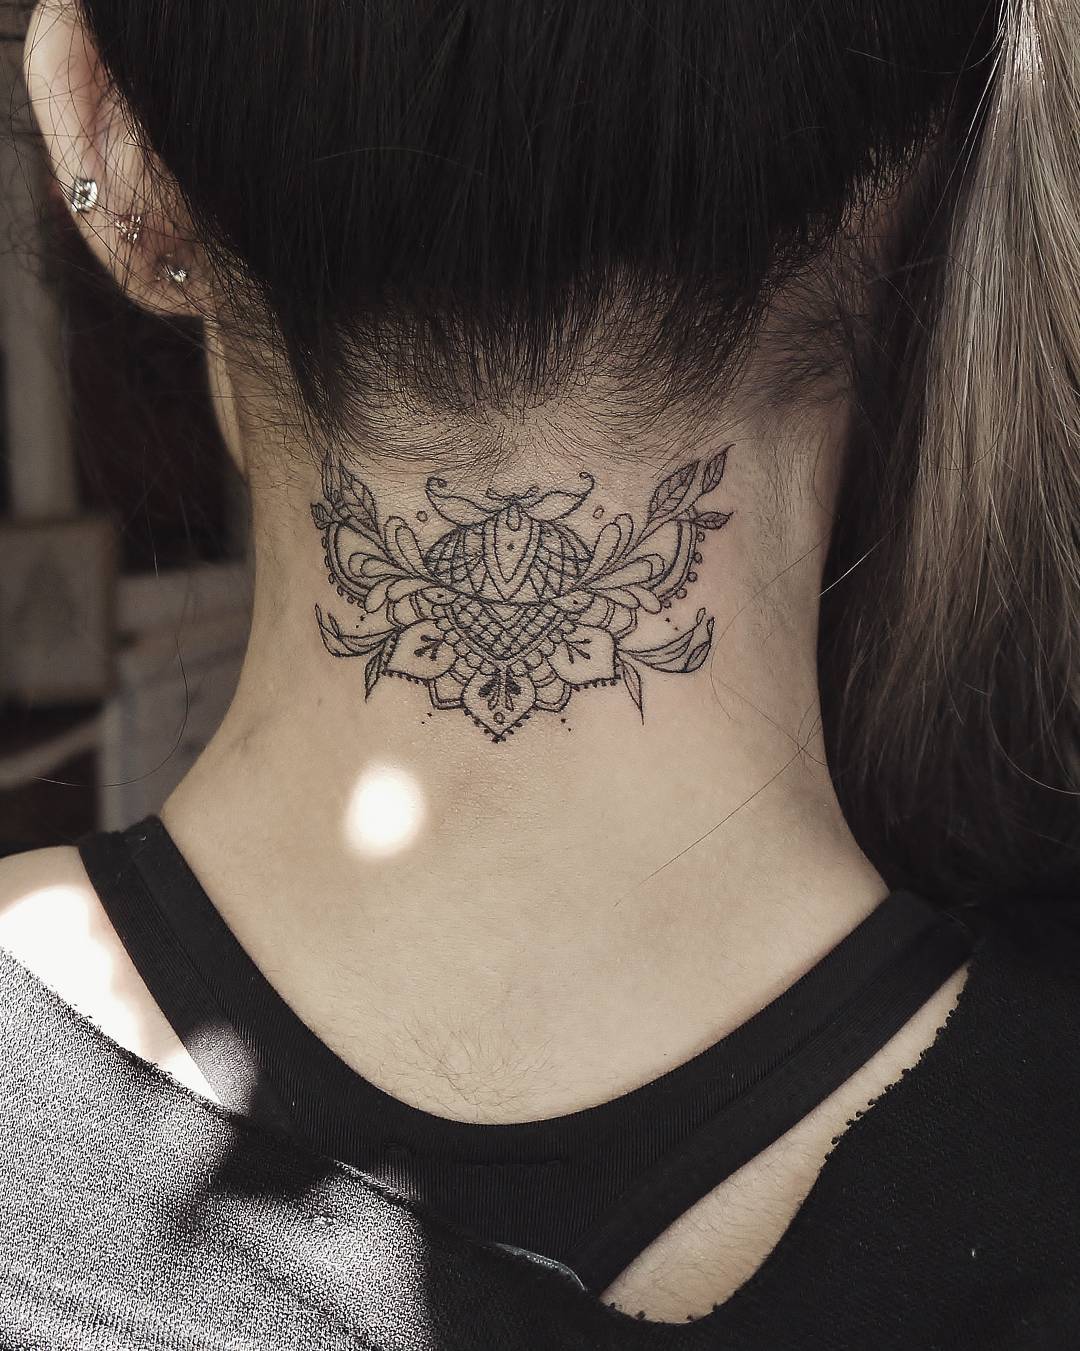 Tattoo on Nape of Neck by indigo_evolution